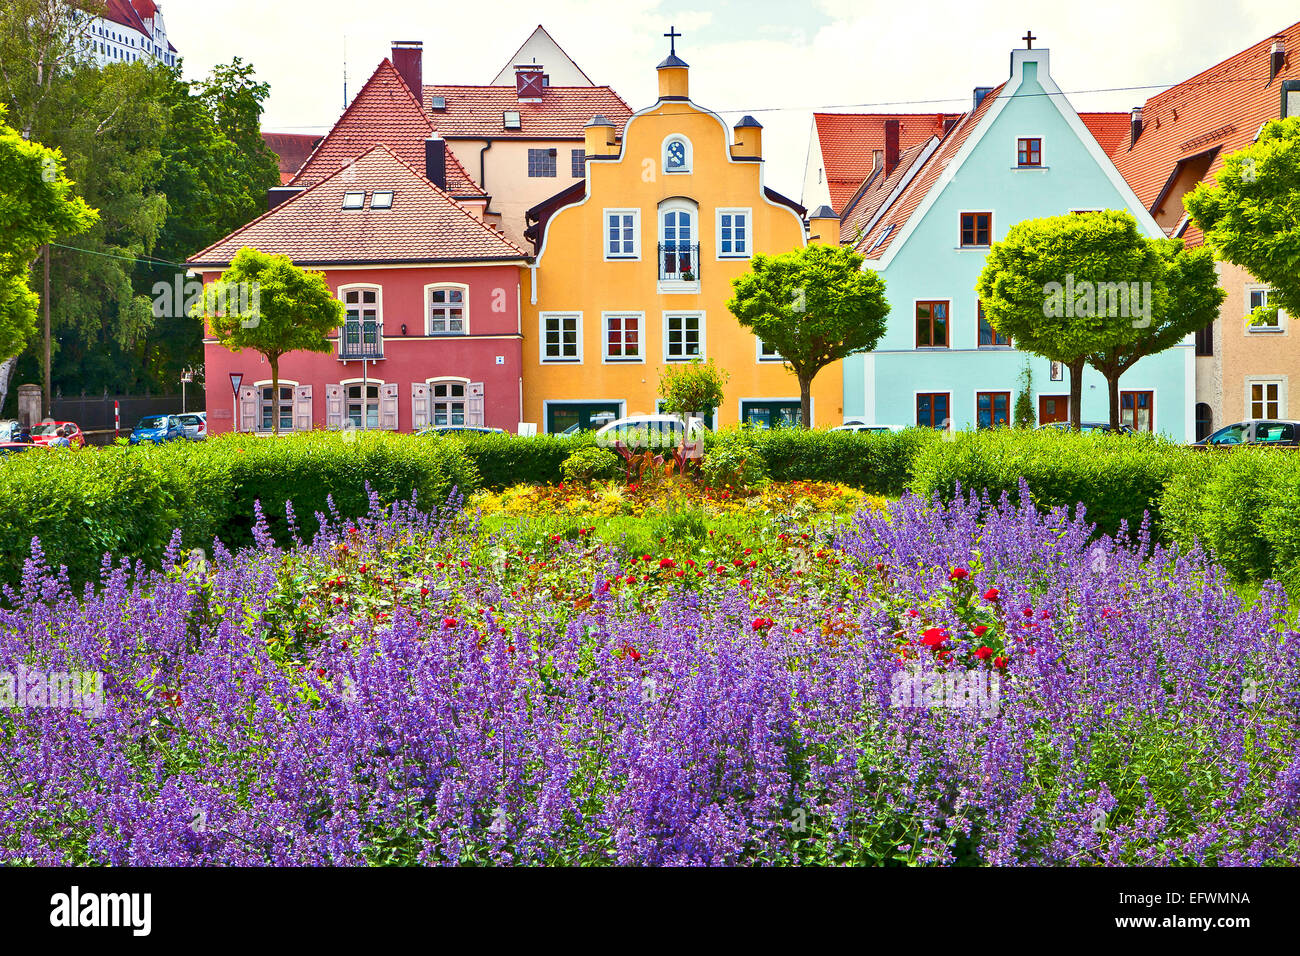 Springtime in Landshut, Bavarian city near Munich. Wonderful purple sage flowerbed in front of typical Renaissance houses Stock Photo